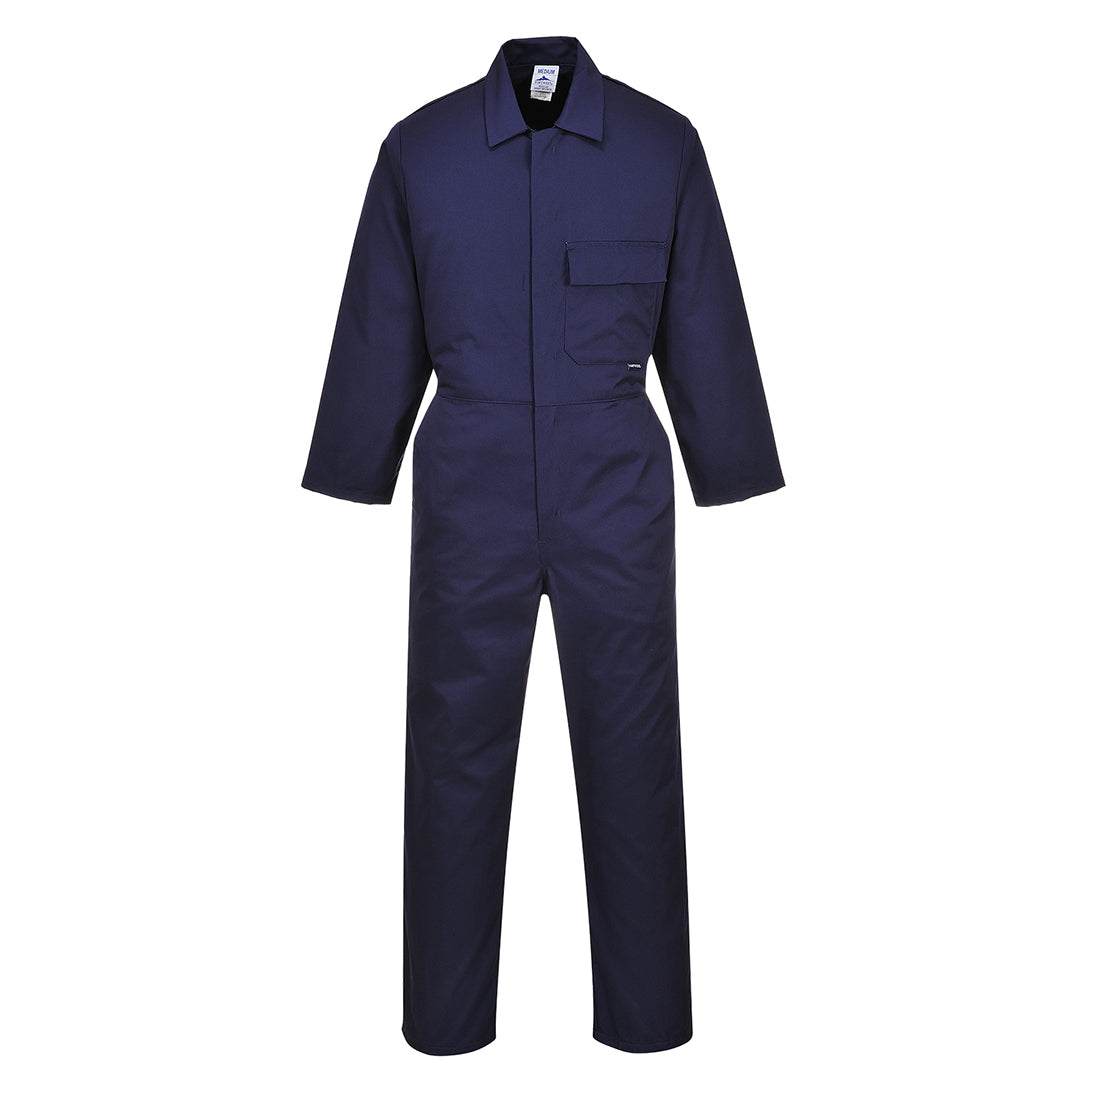 Portwest 2802 - Navy T Standard Coverall boiler suit sz XXL Tall